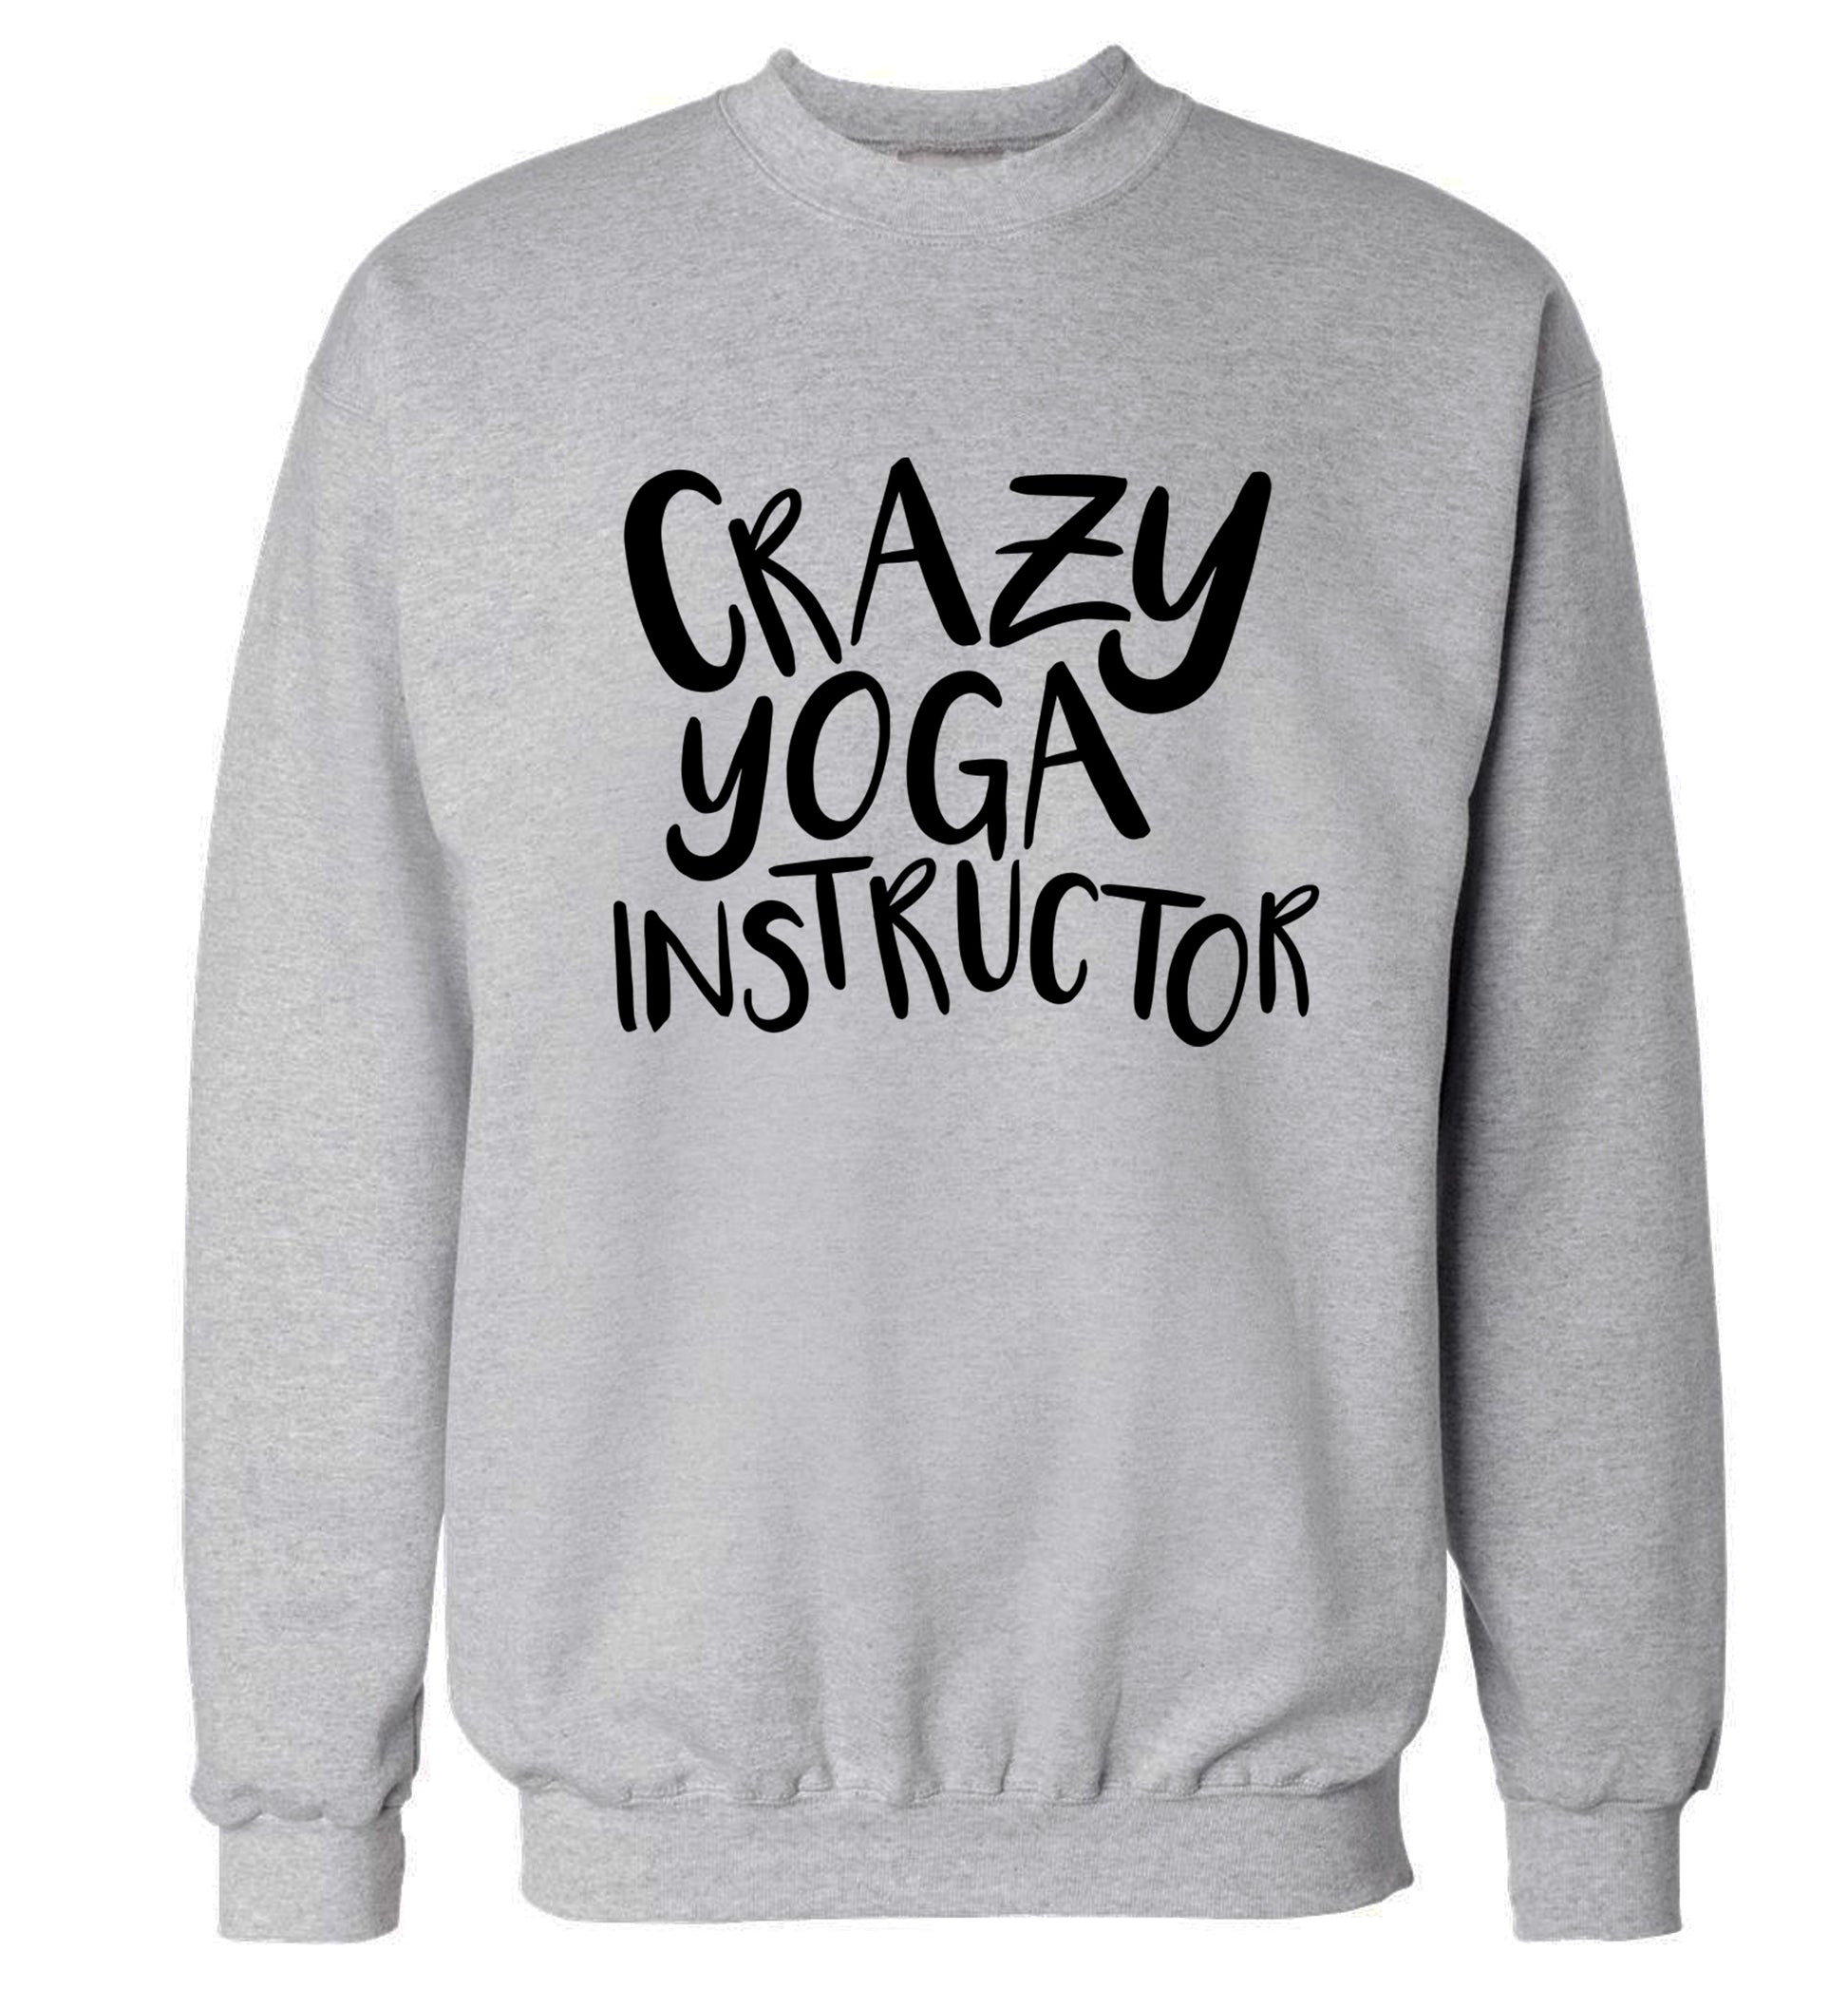 Crazy yoga instructor Adult's unisex grey Sweater 2XL